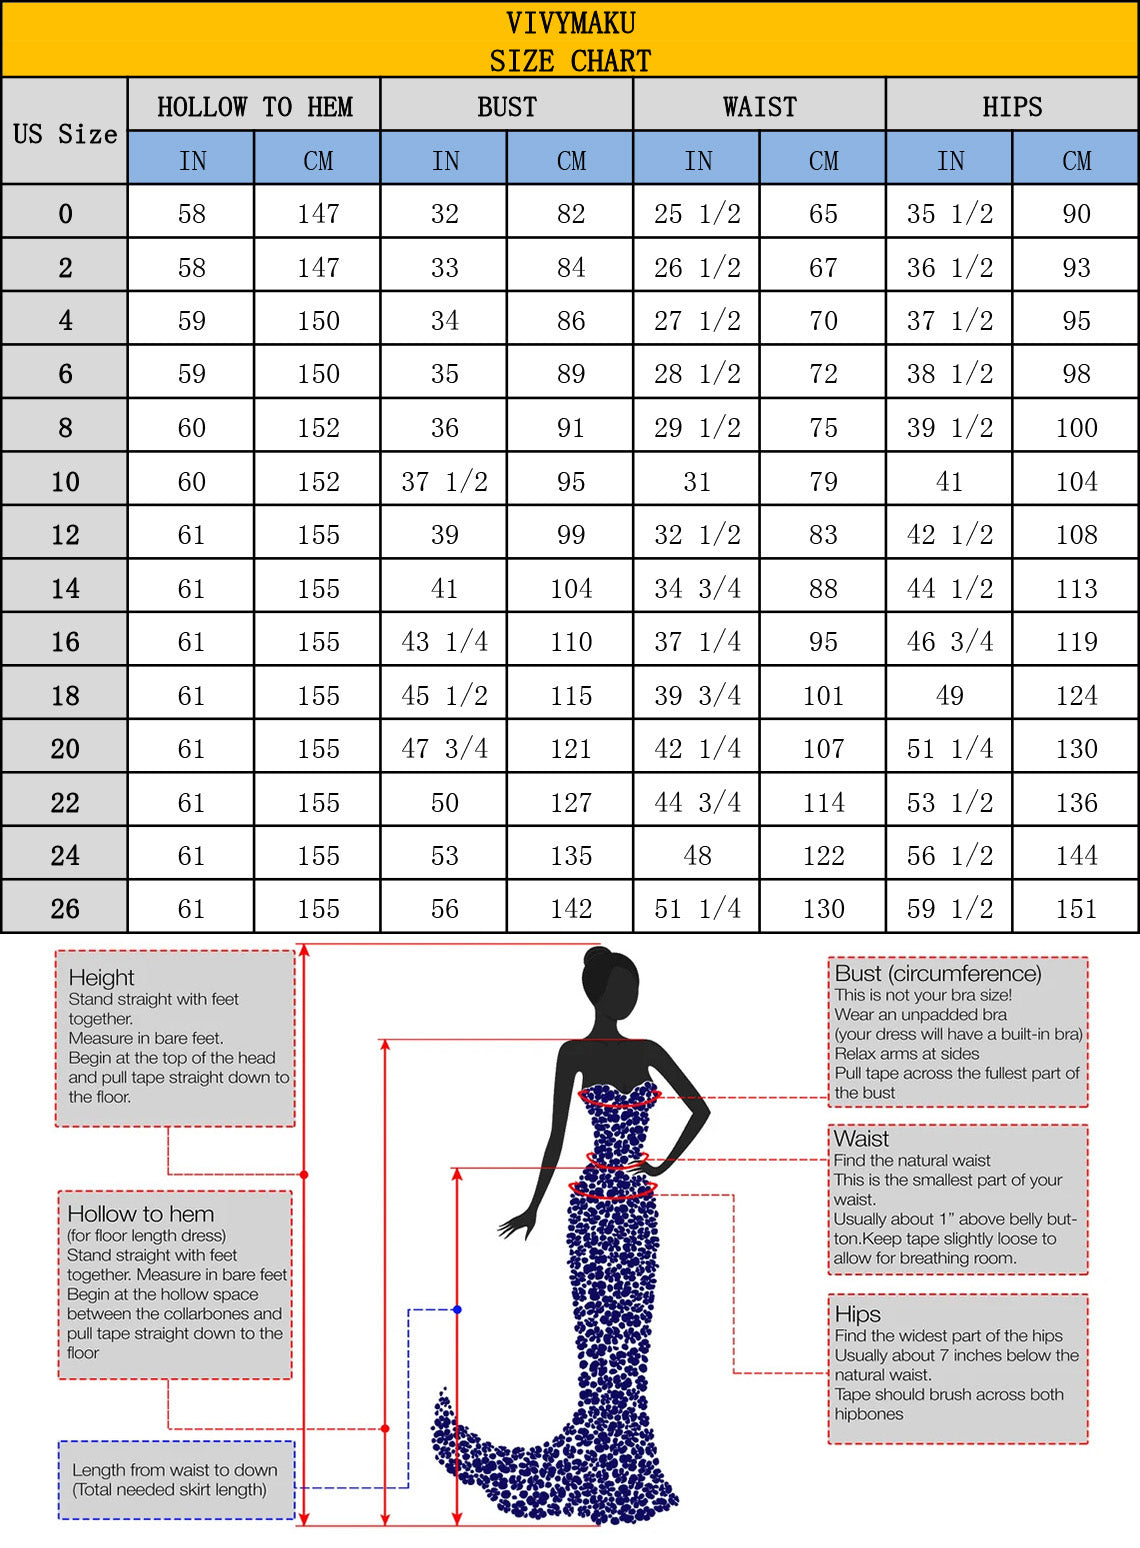 Off-the-Shoulder Homecoming Dress Tea-Length Dresses VMH61